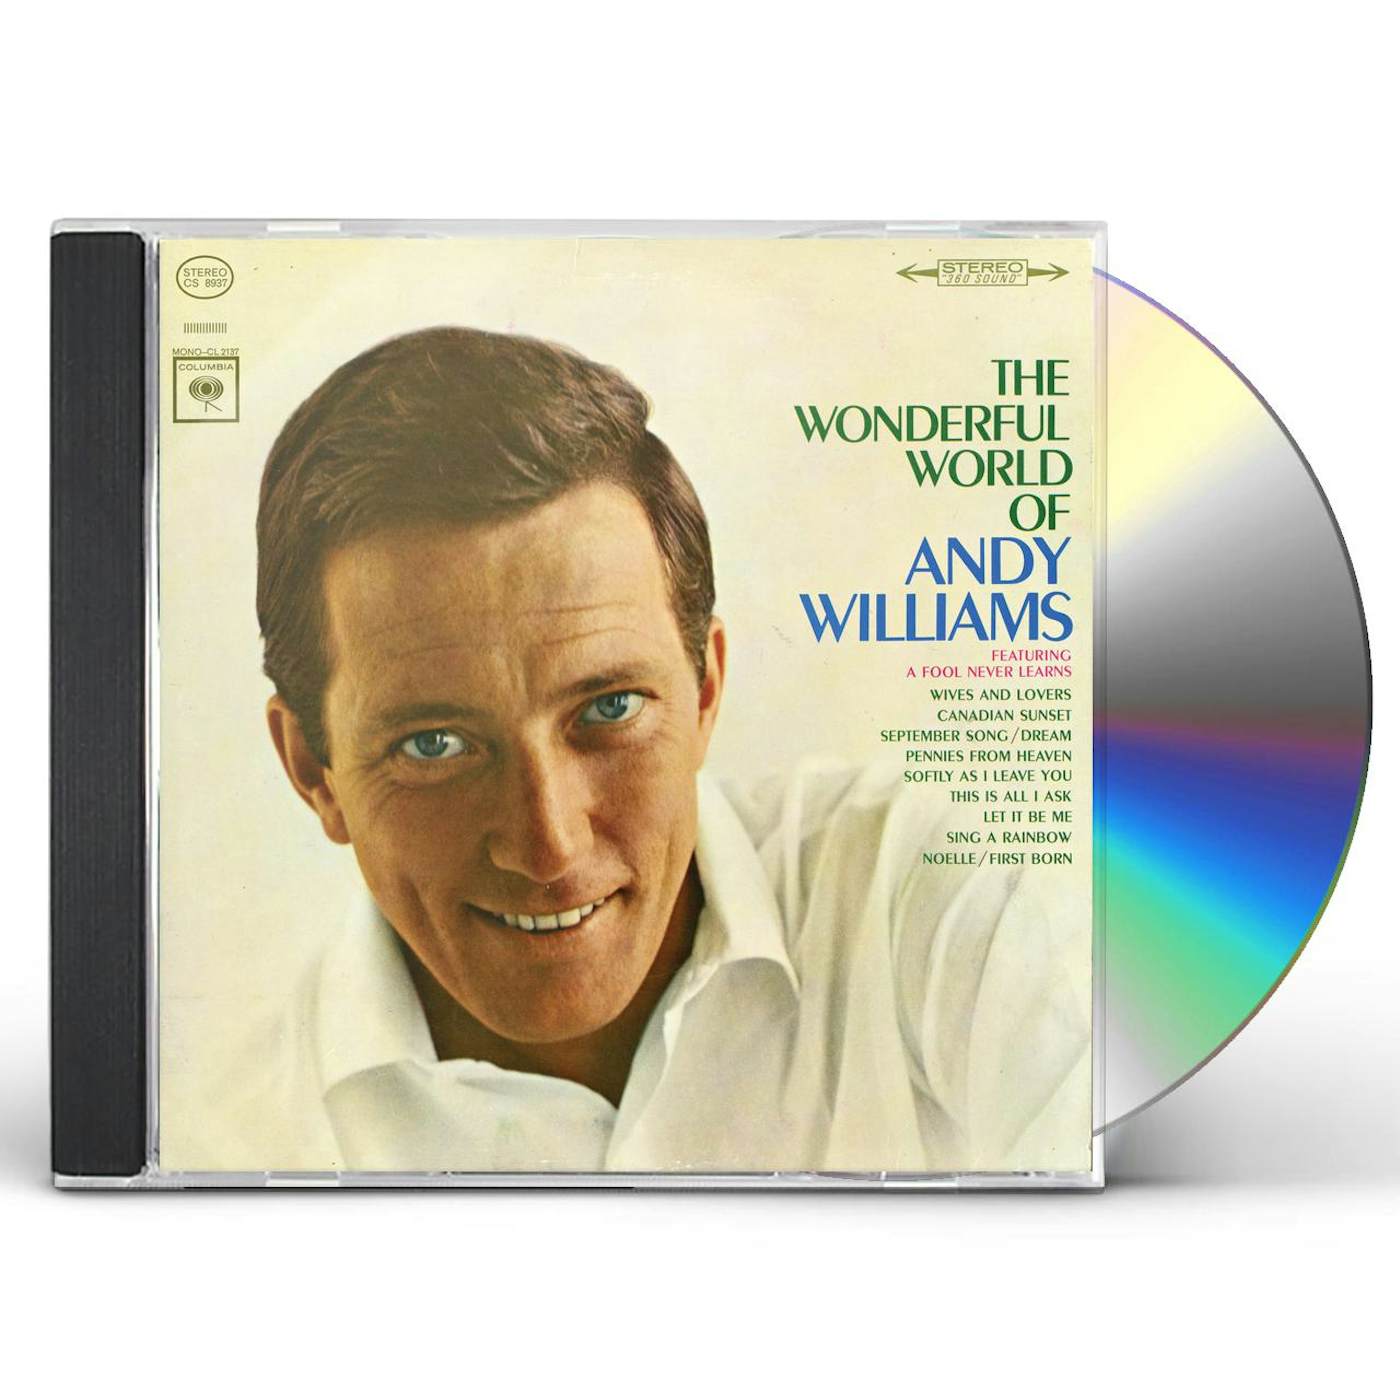 WONDERFUL WORLD OF ANDY WILLIAMS CD